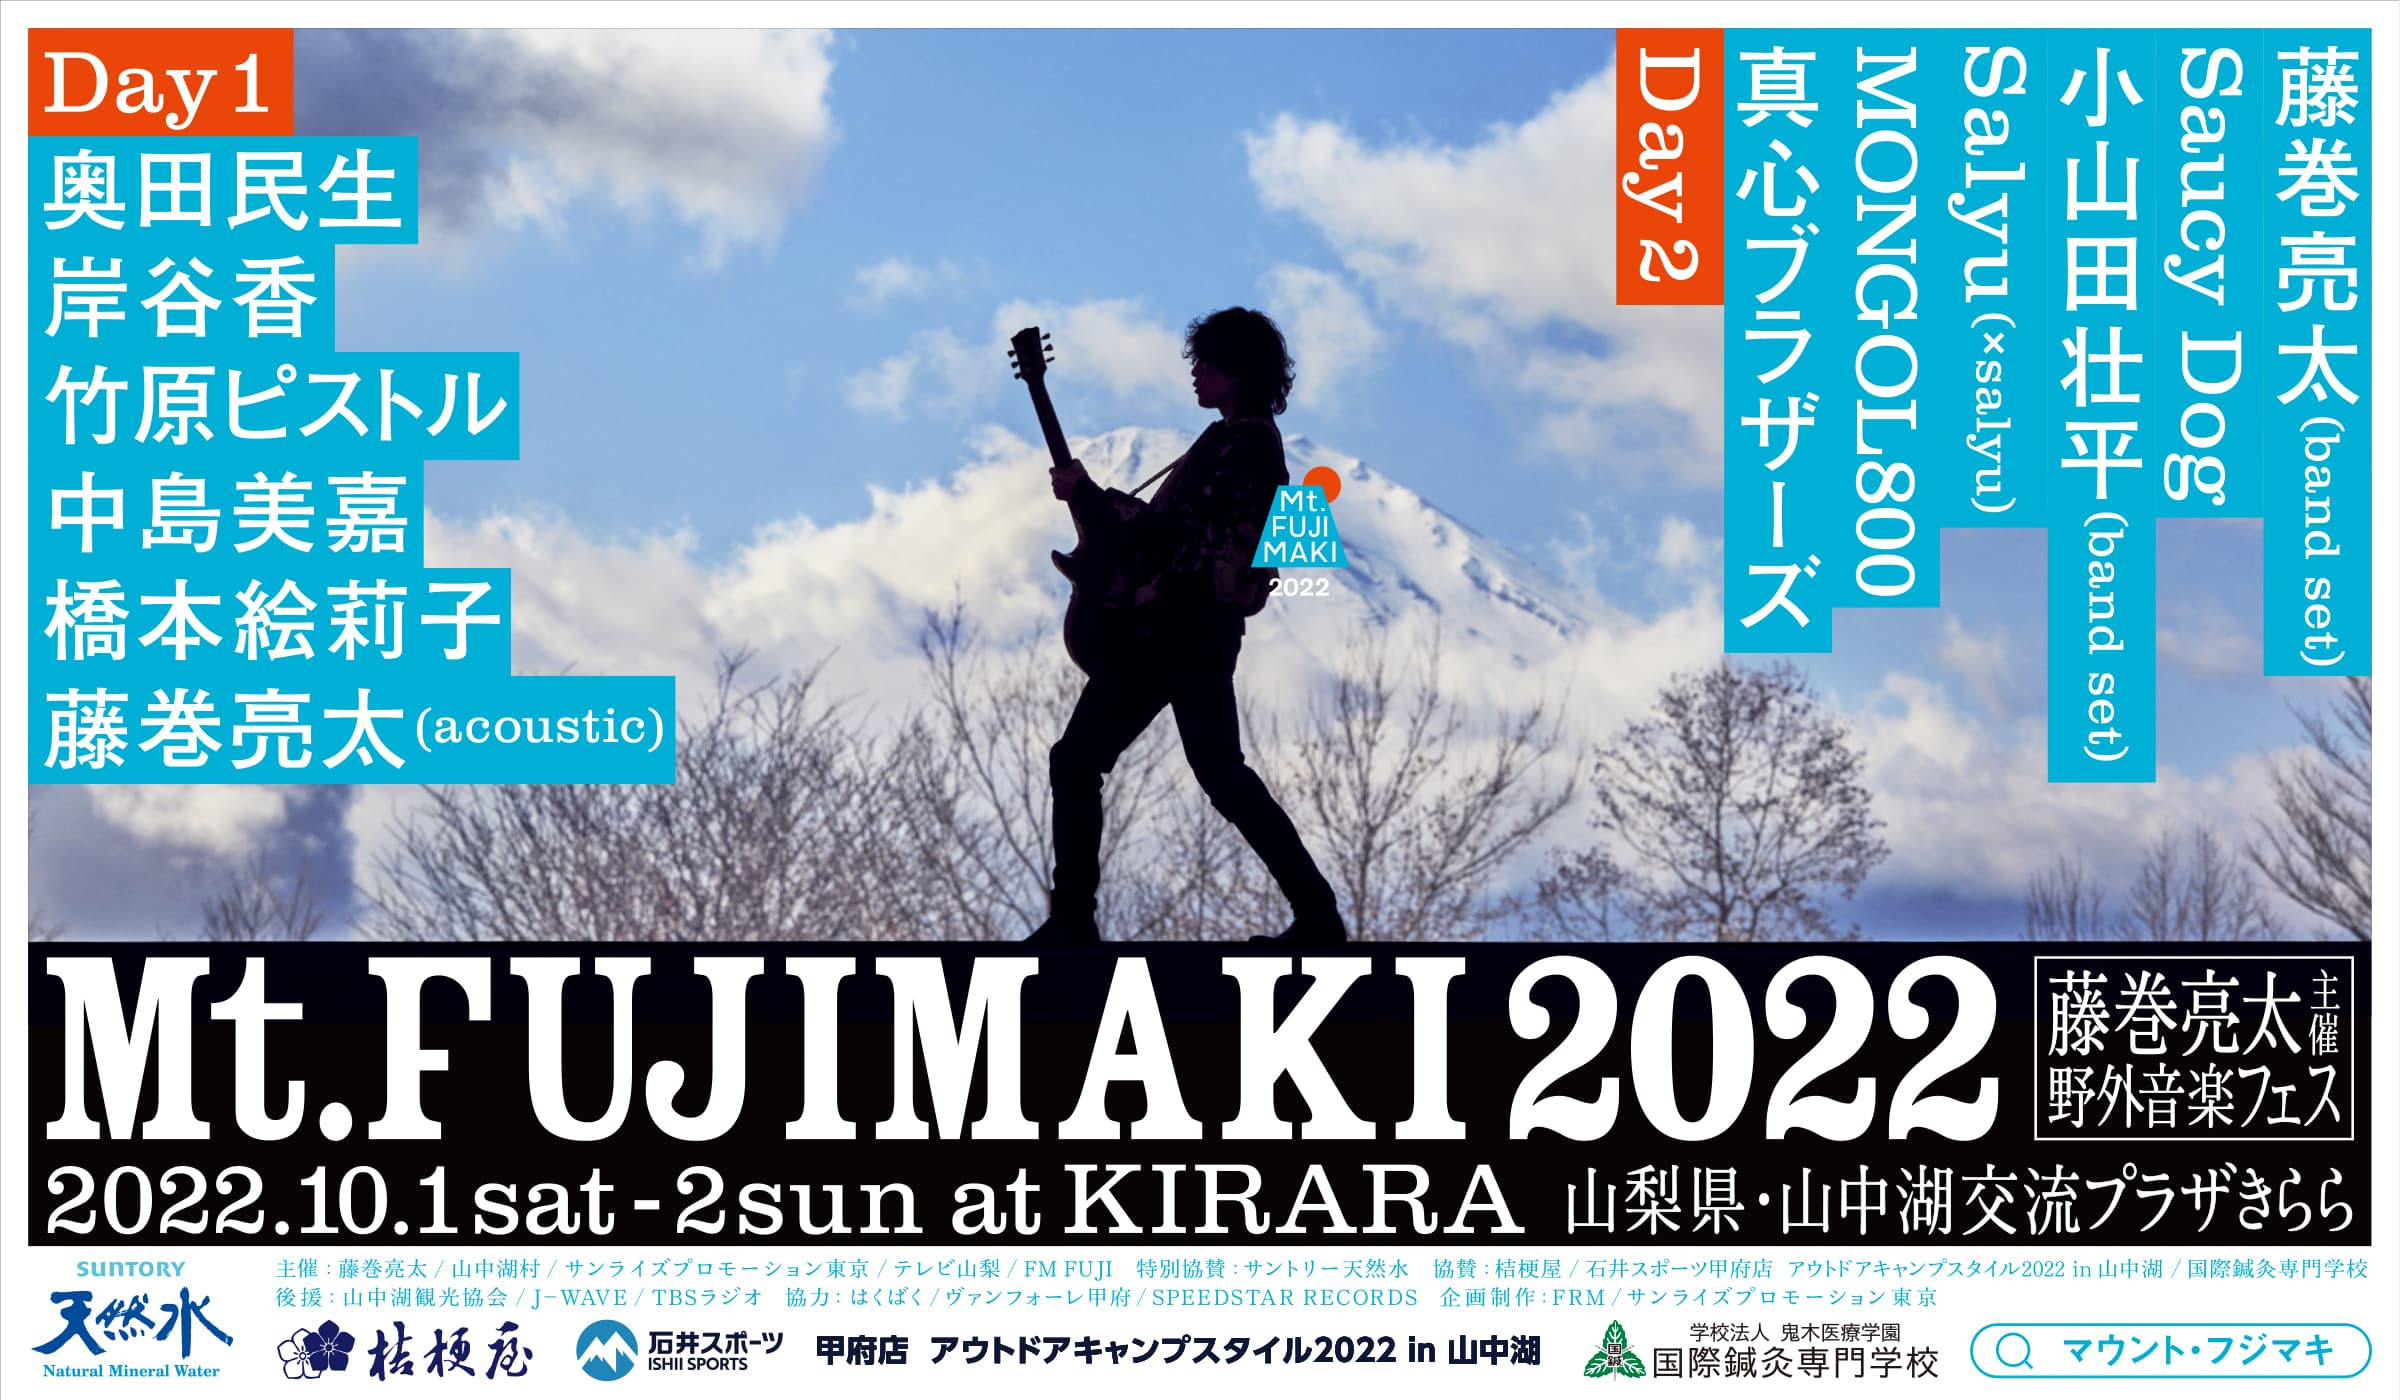 「Mt.FUJIMAKI 2022」開催宣言